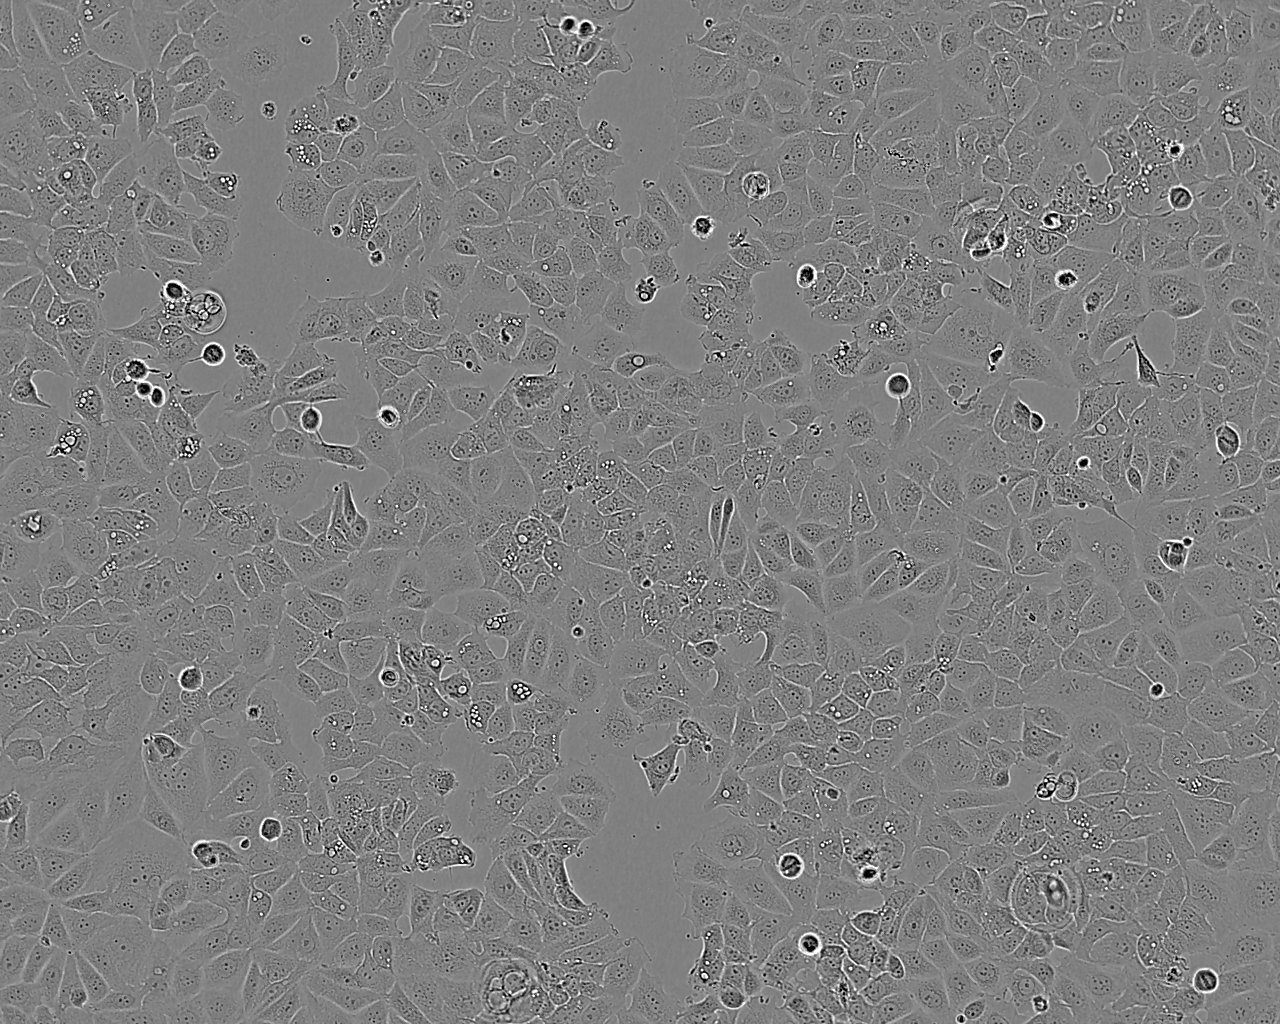 KTC-1细胞：人甲状腺癌细胞系